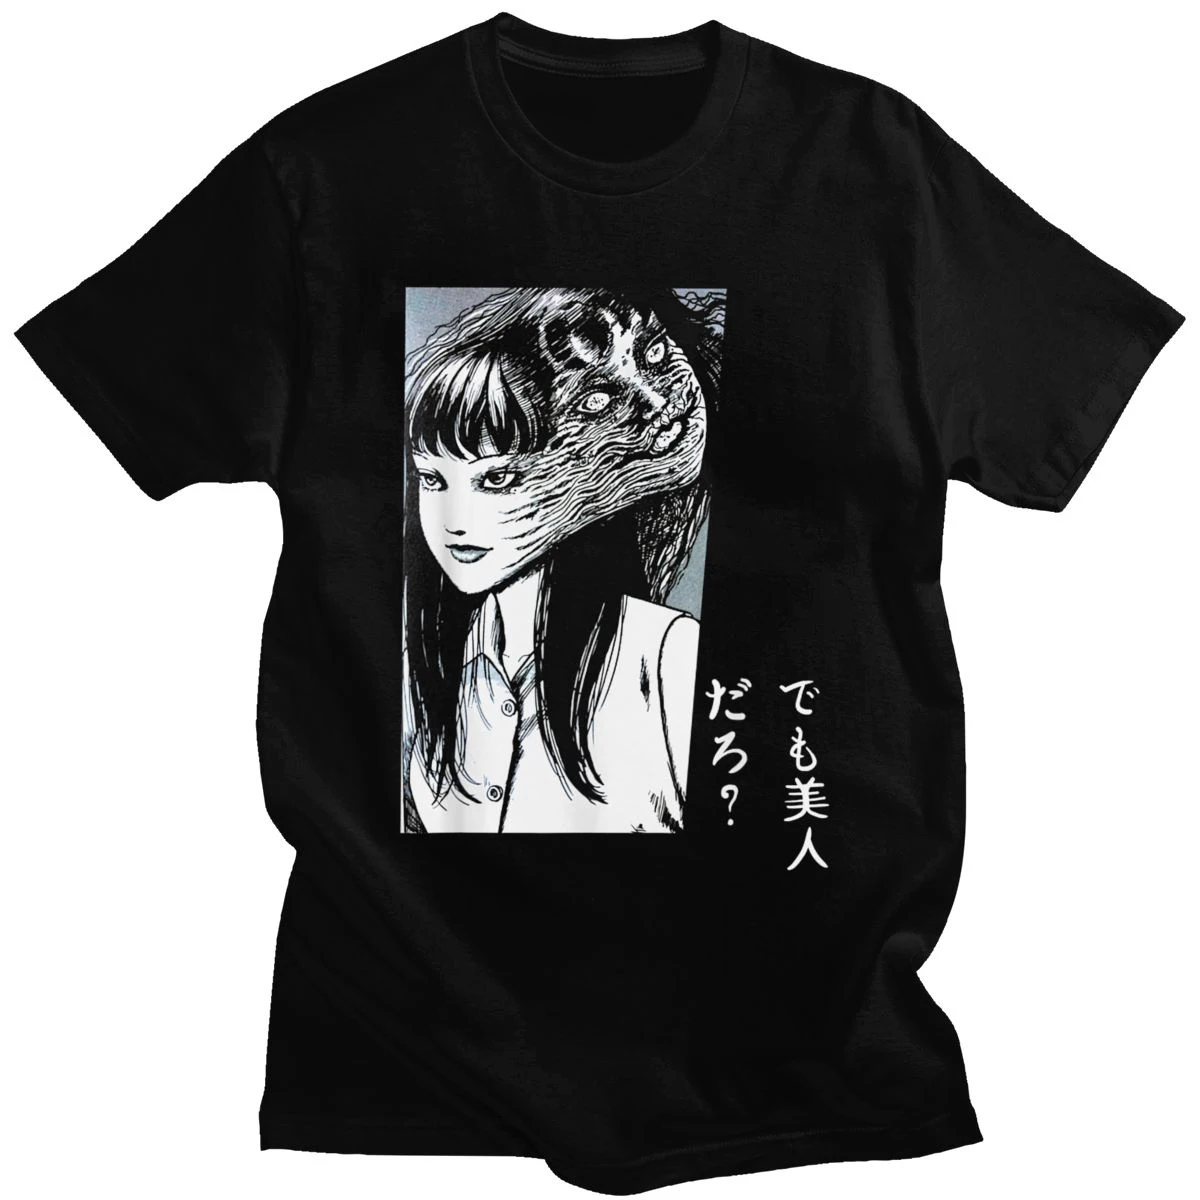 Summer cloth Harajuku TShirt for Men/Women  T-shirt Short Sleeve Horror Manga Uzumaki Evangelion Akira Shintaro Kago Tee top